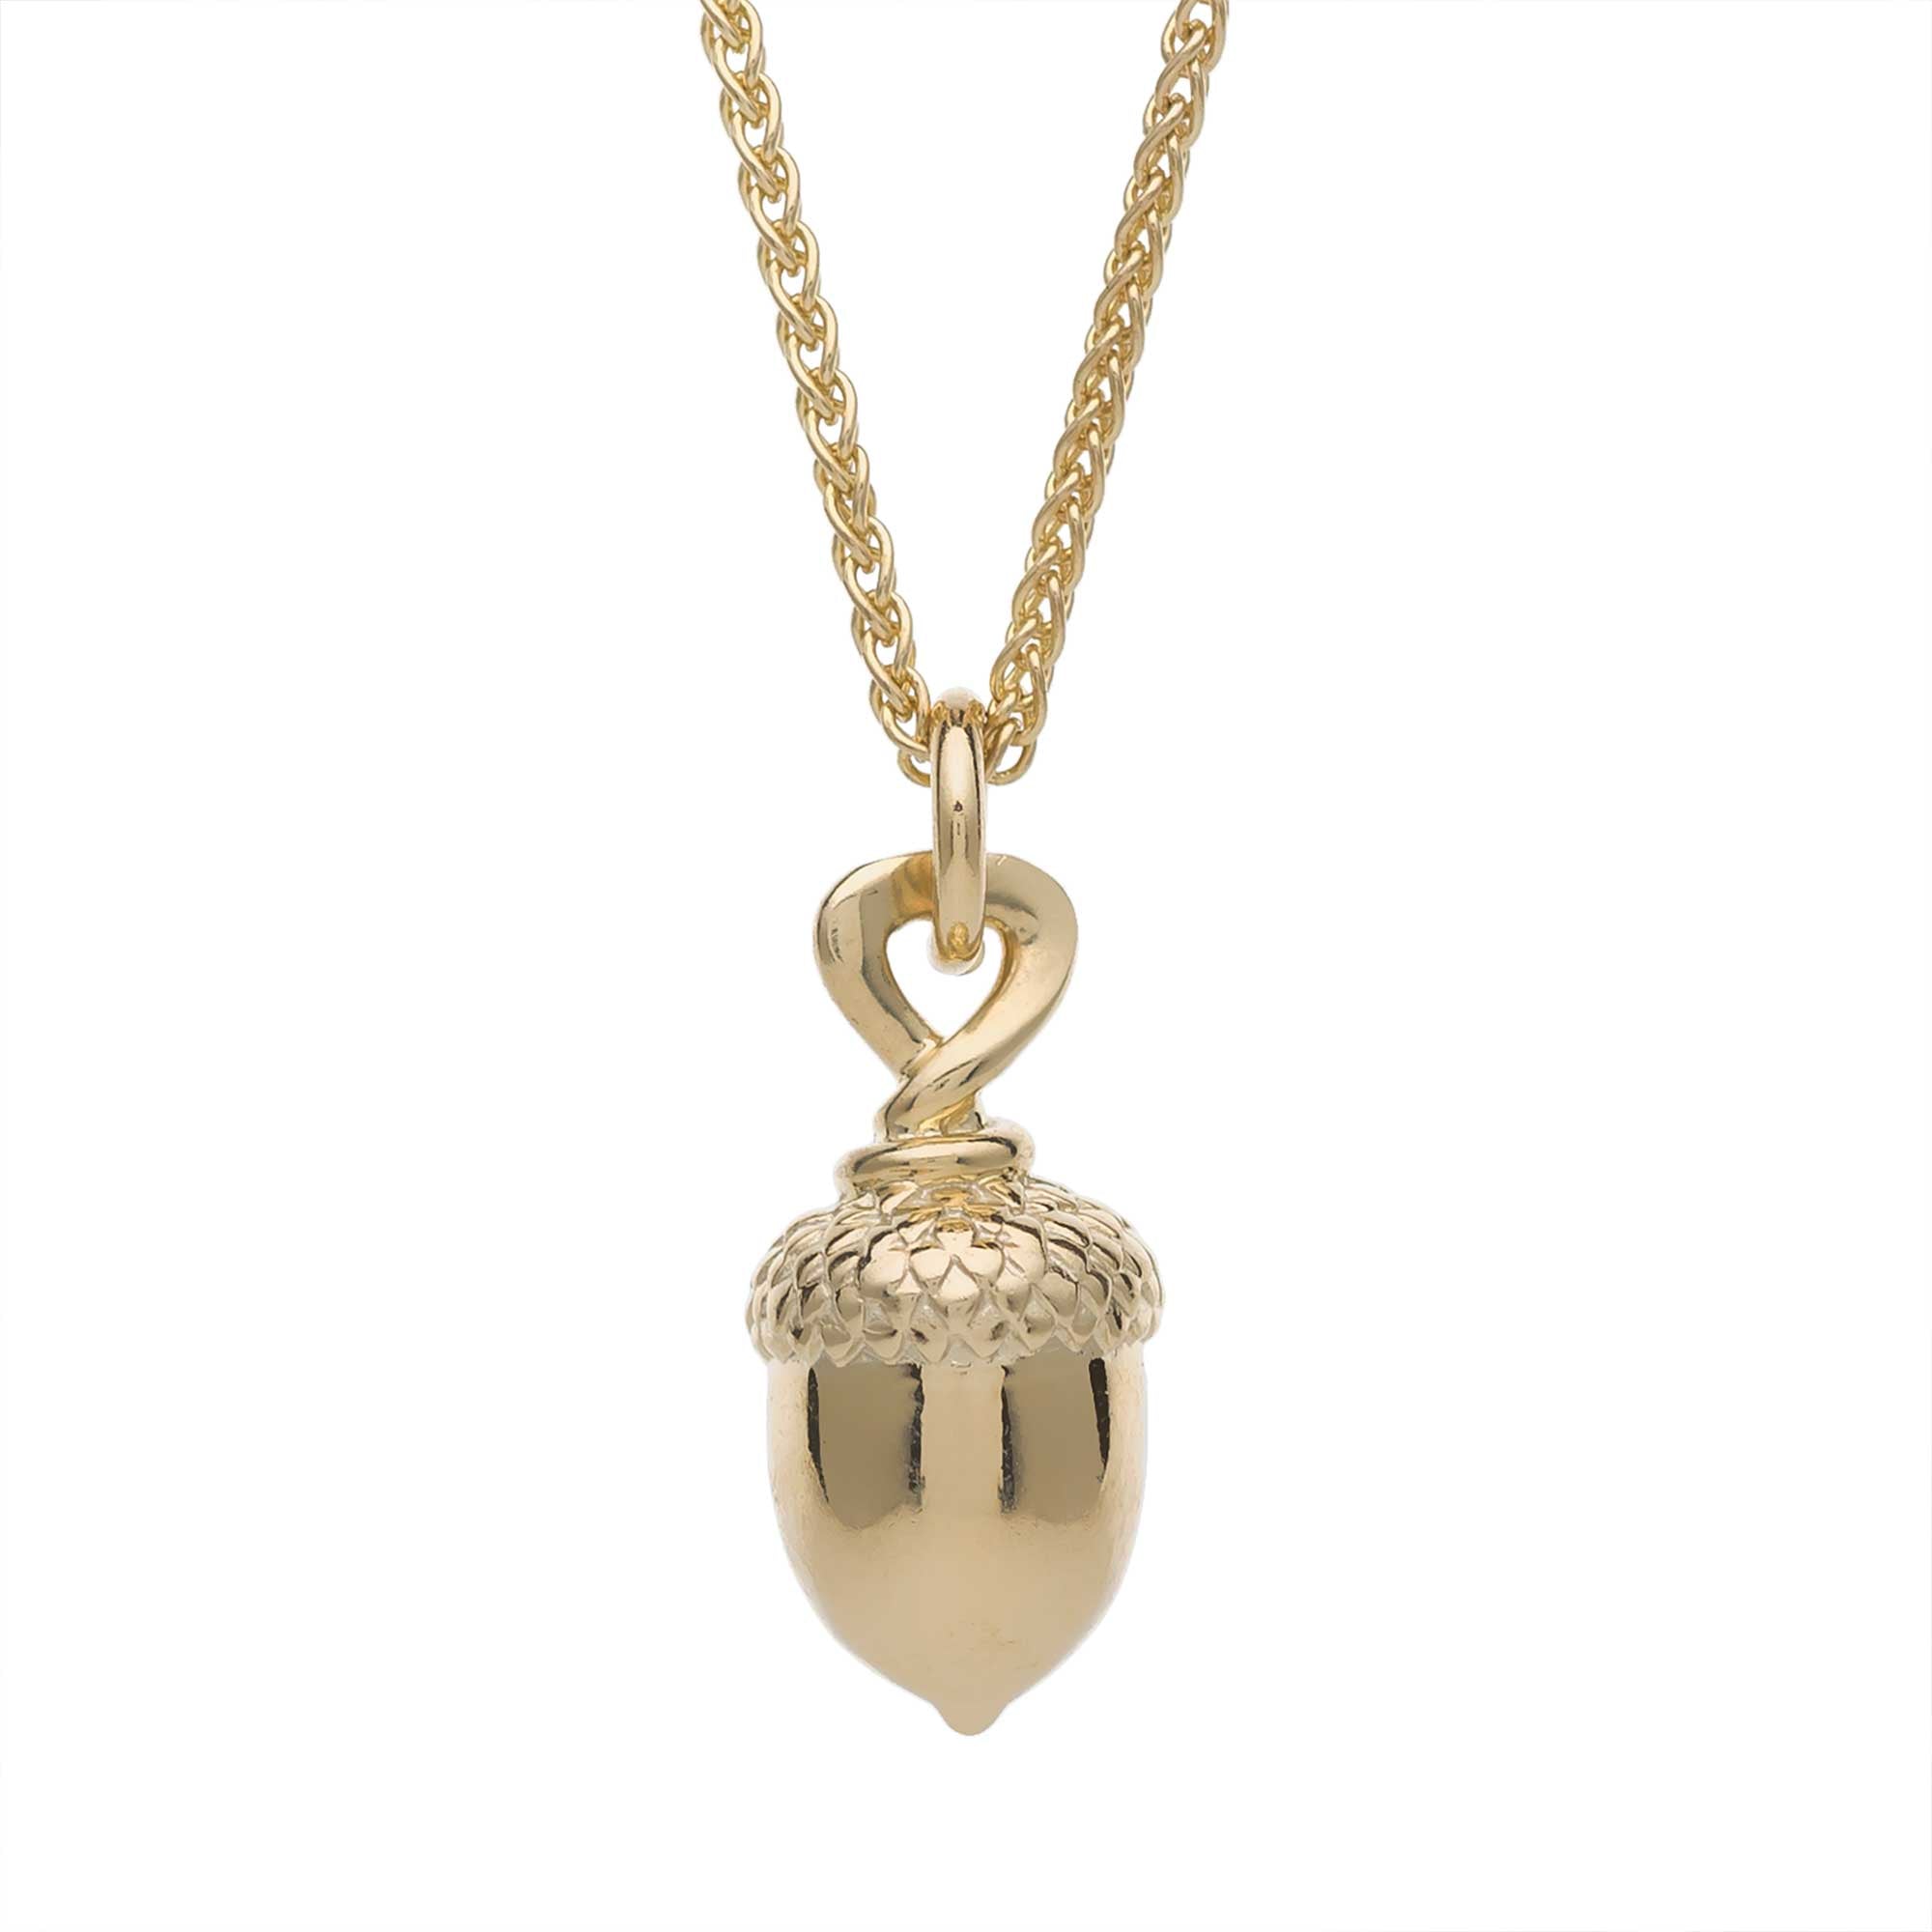 Solid gold acorn necklace handmade UK Designer Scarlett Jewellery